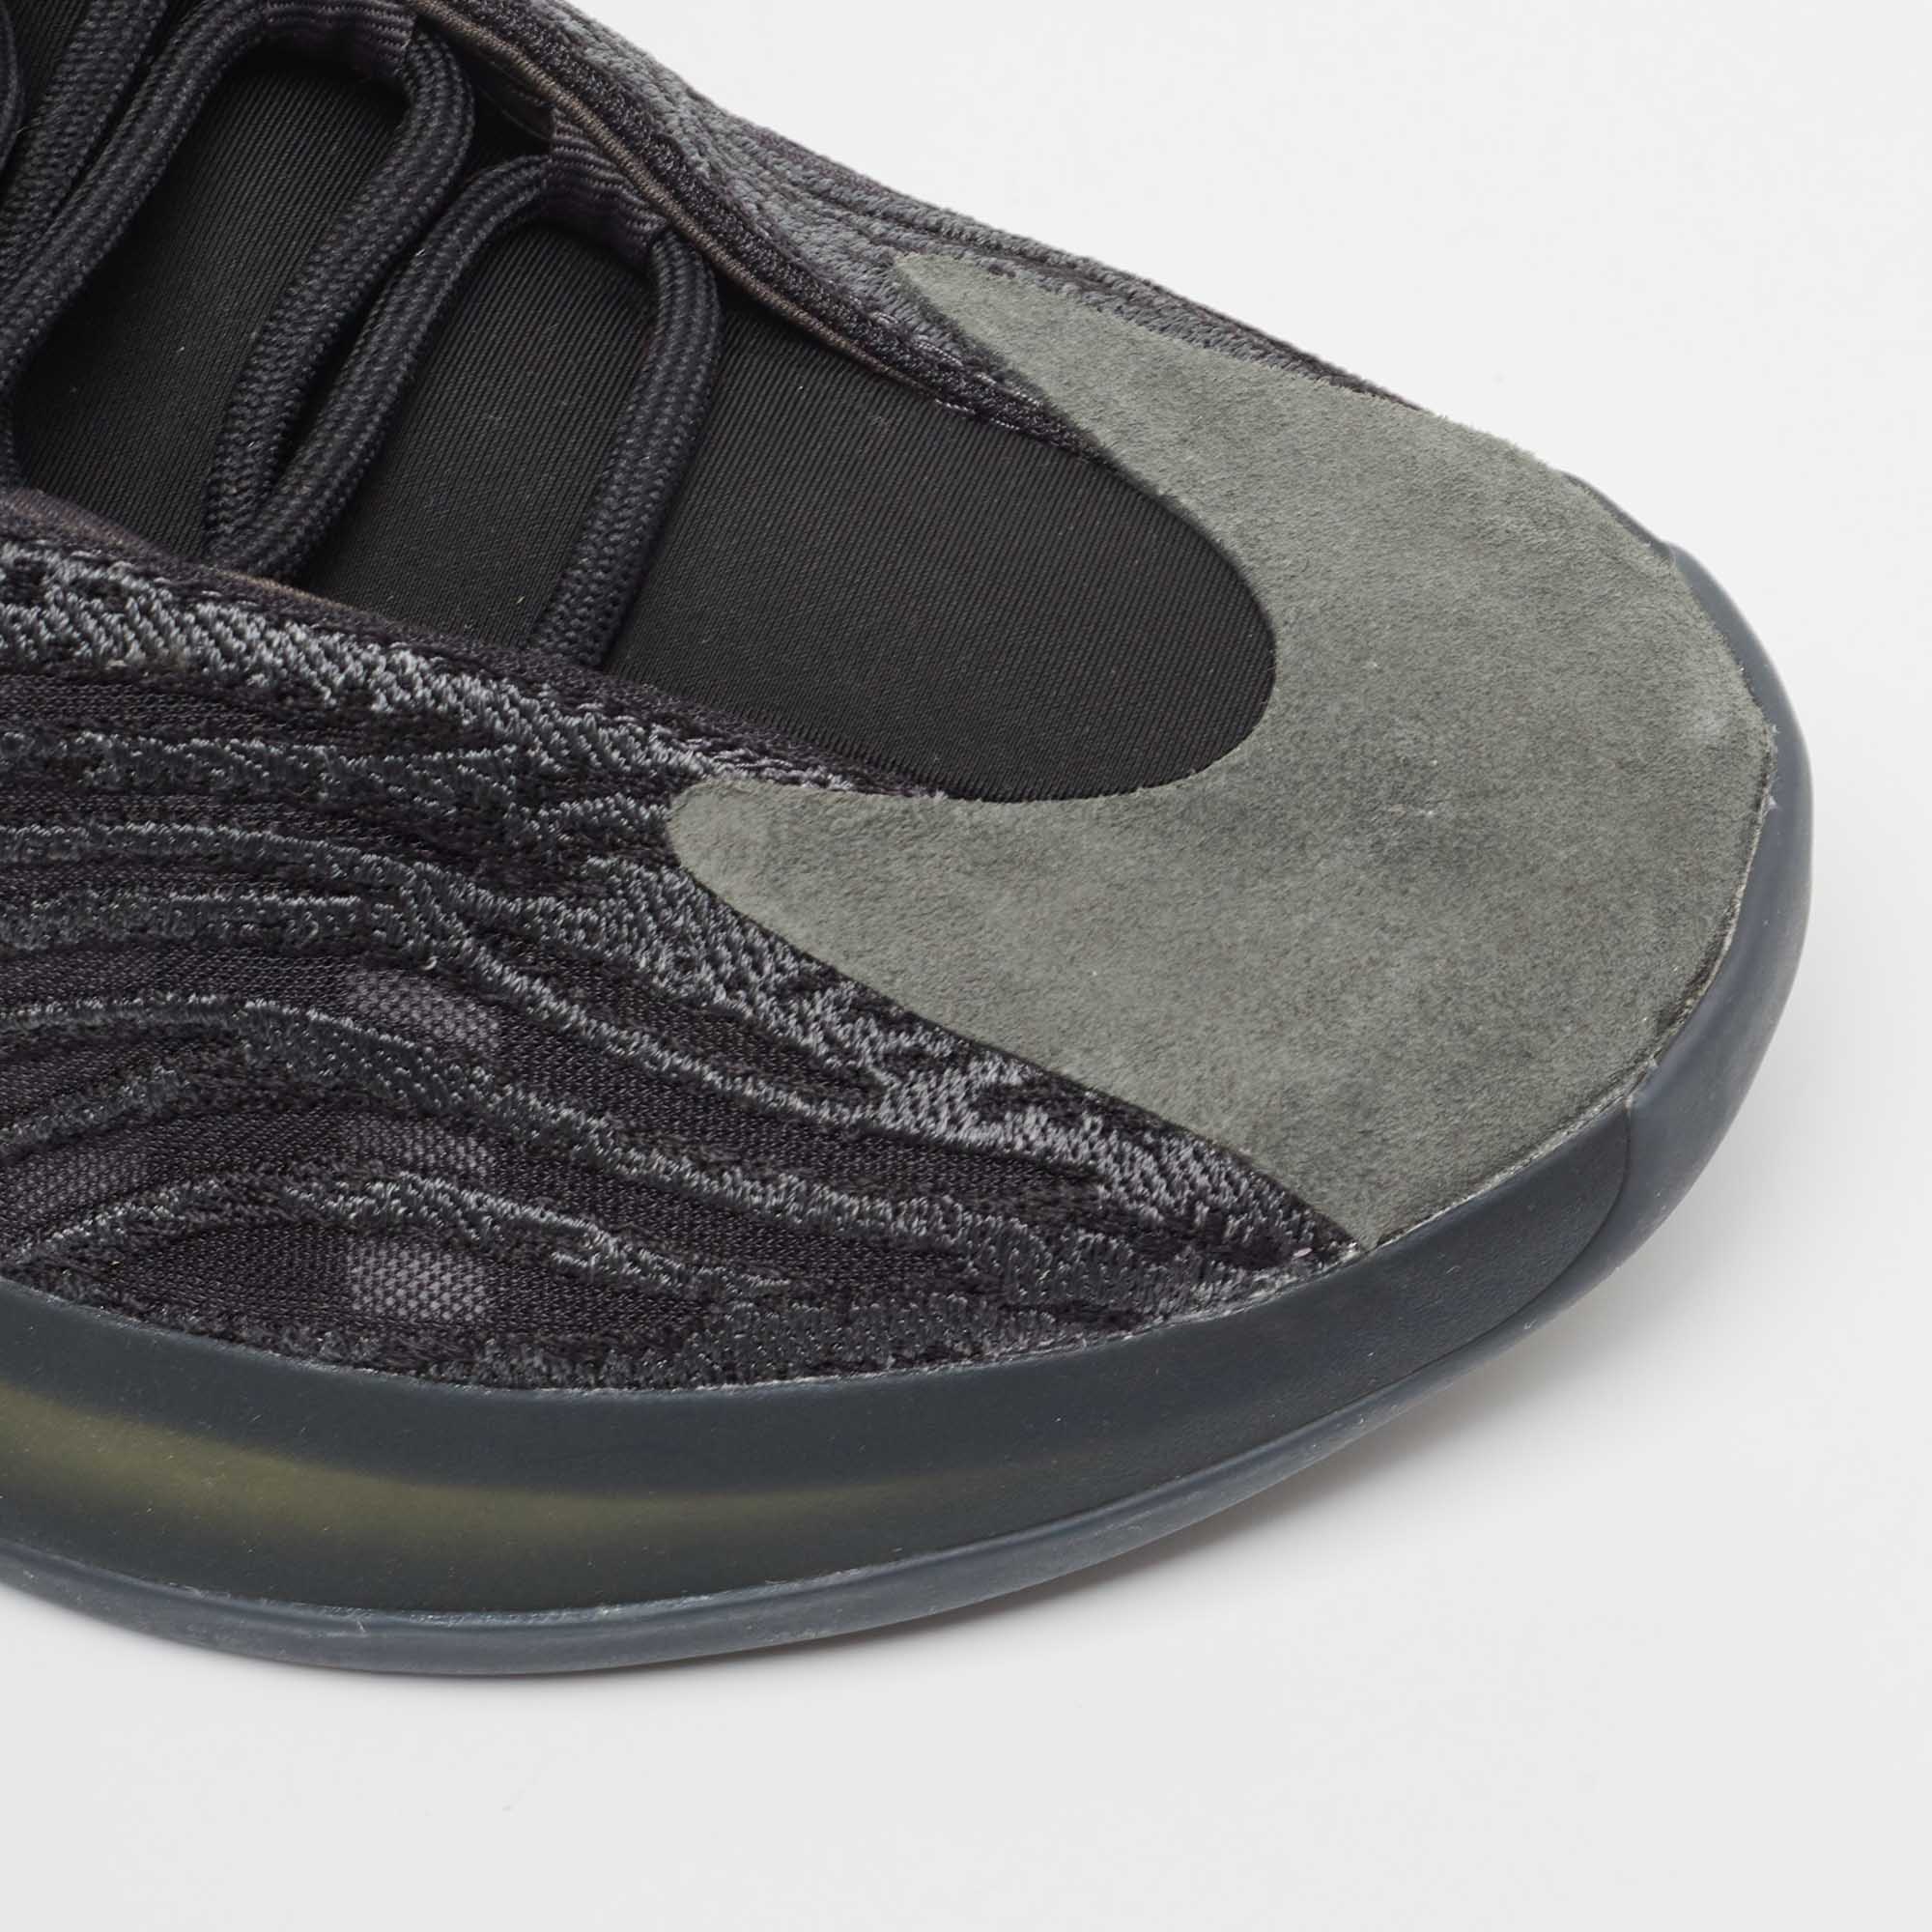 Yeezy X Adidas Black Mesh And Neoprene QNTM Onyx Sneakers Size 47 1/3